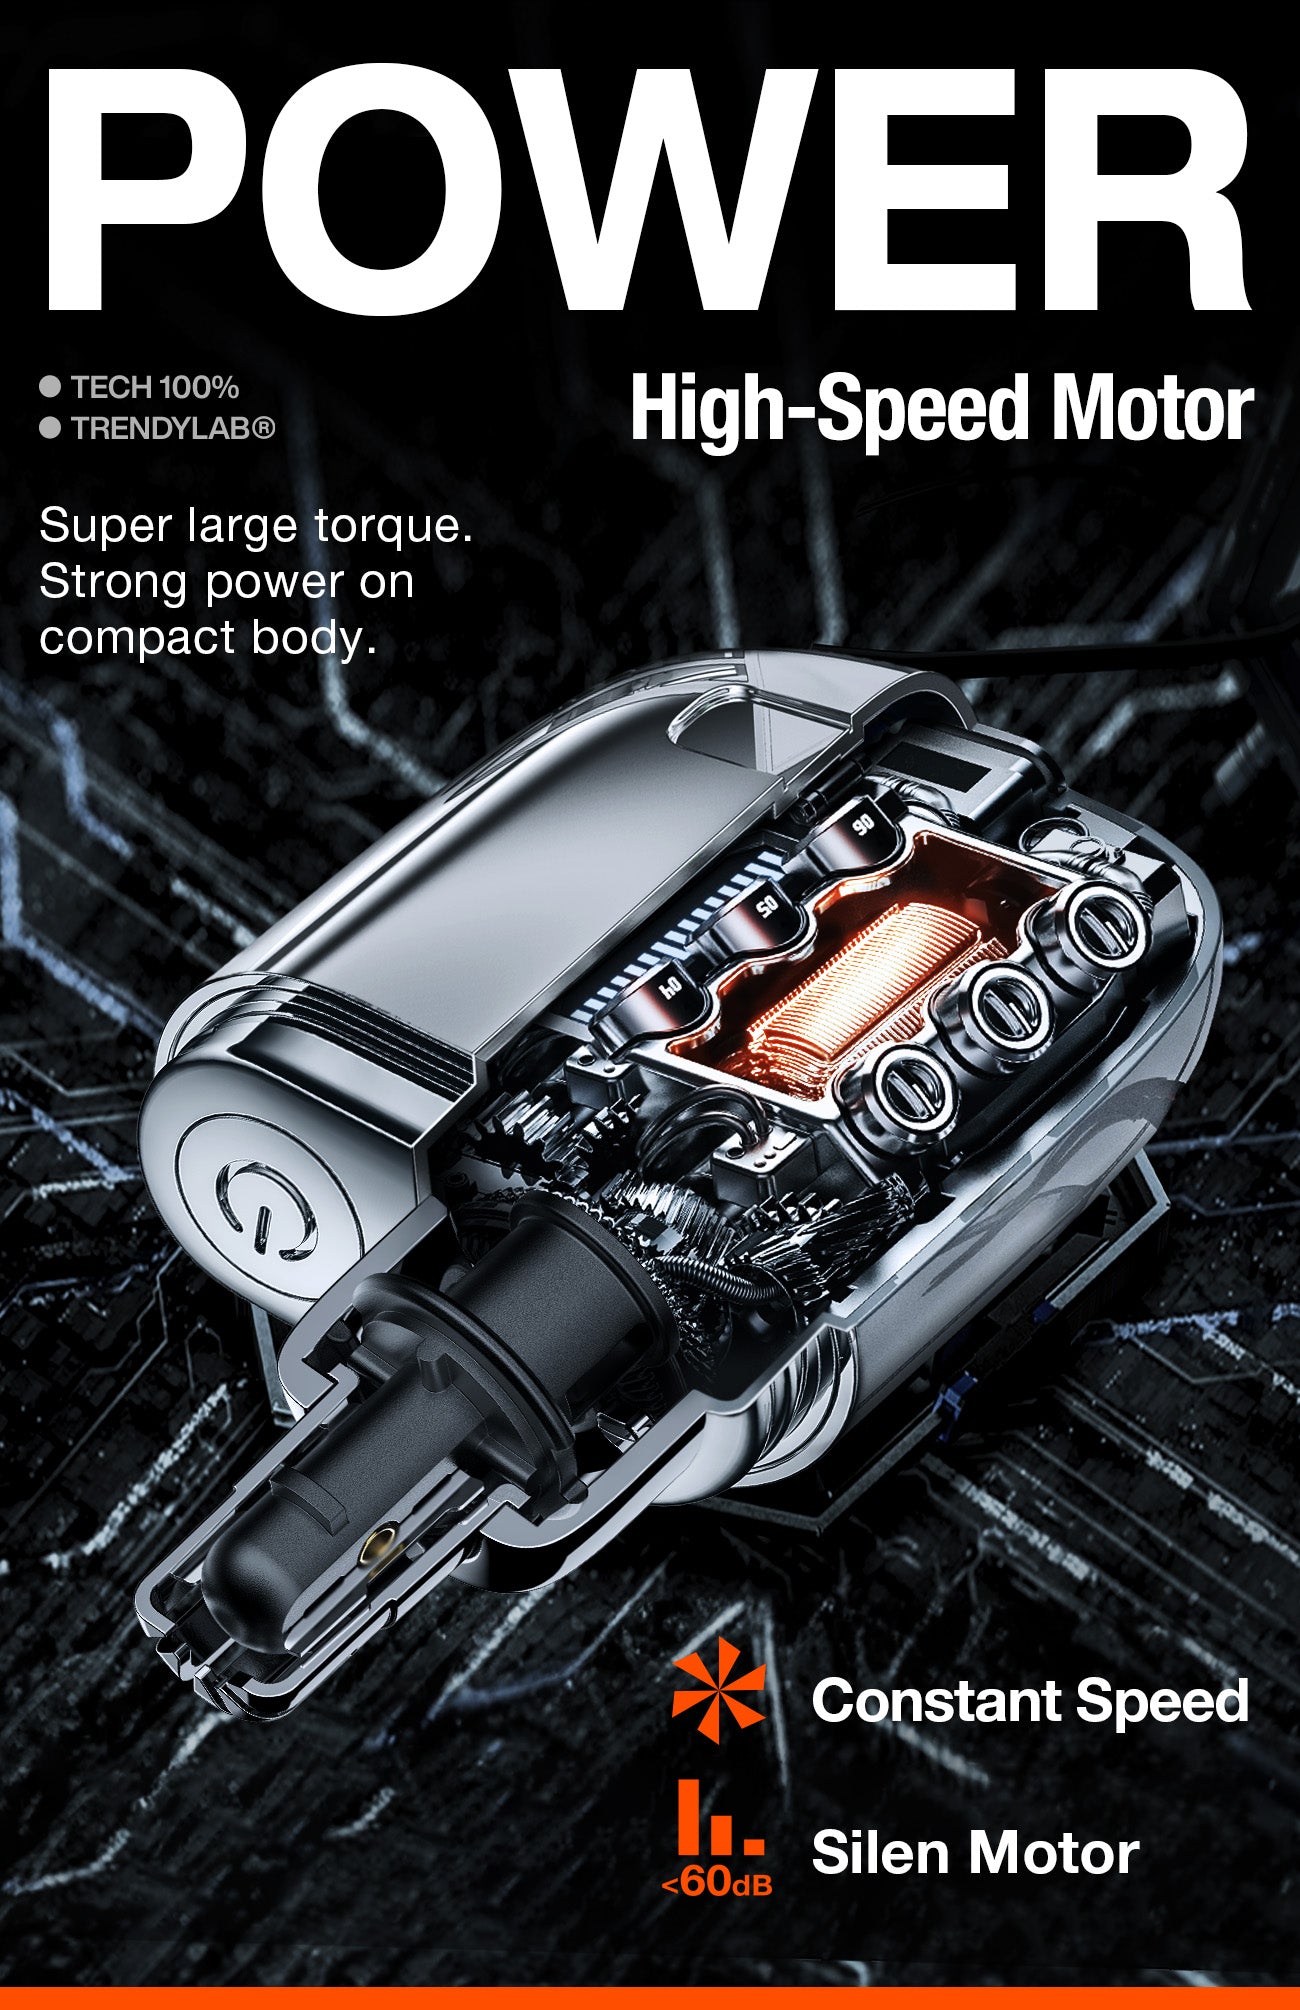 Power High-Speed Motor